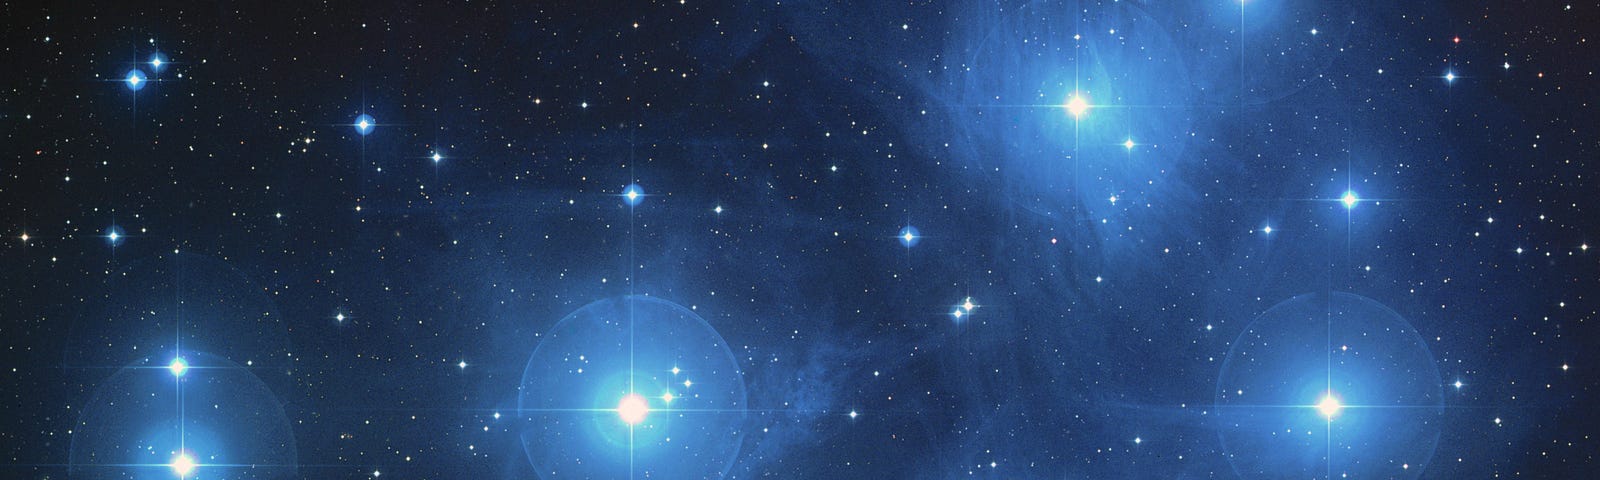 NASA image of the principal stars of the Peiades.